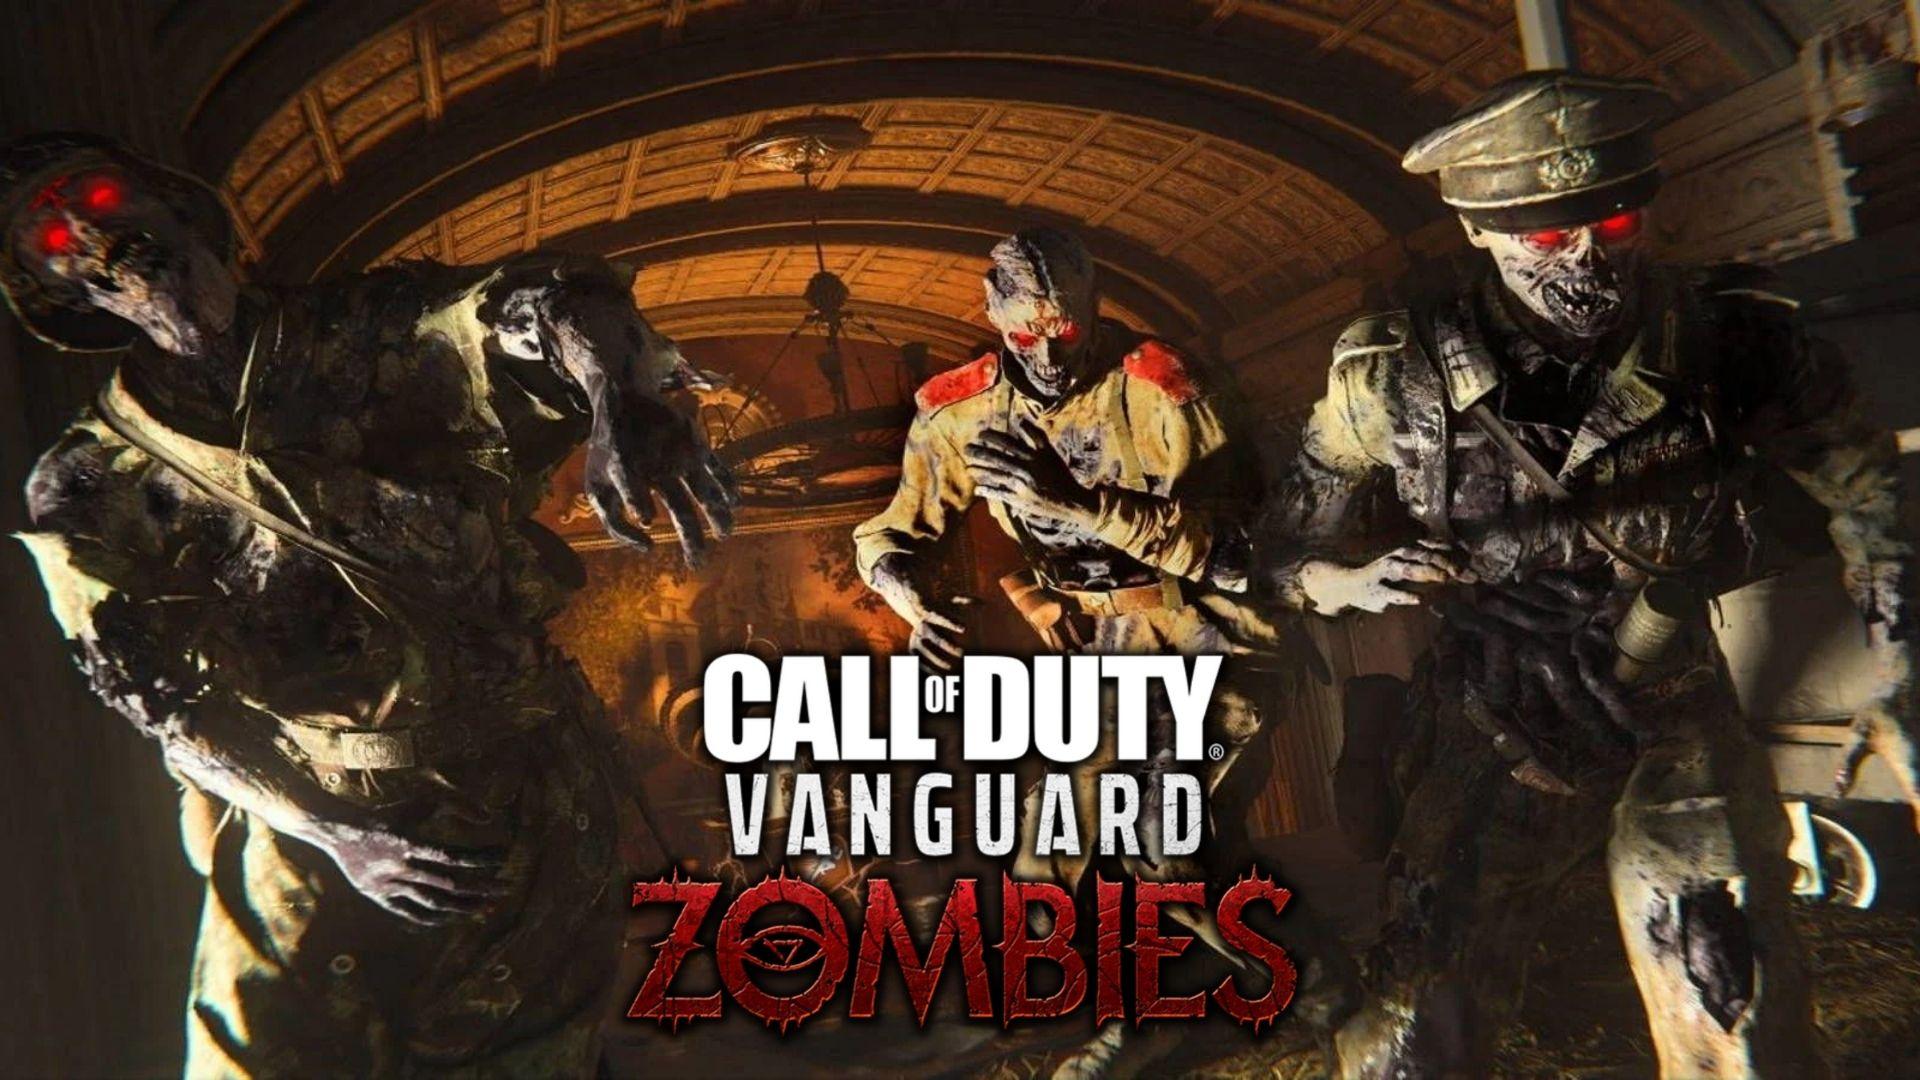 vanguard zombies attacking